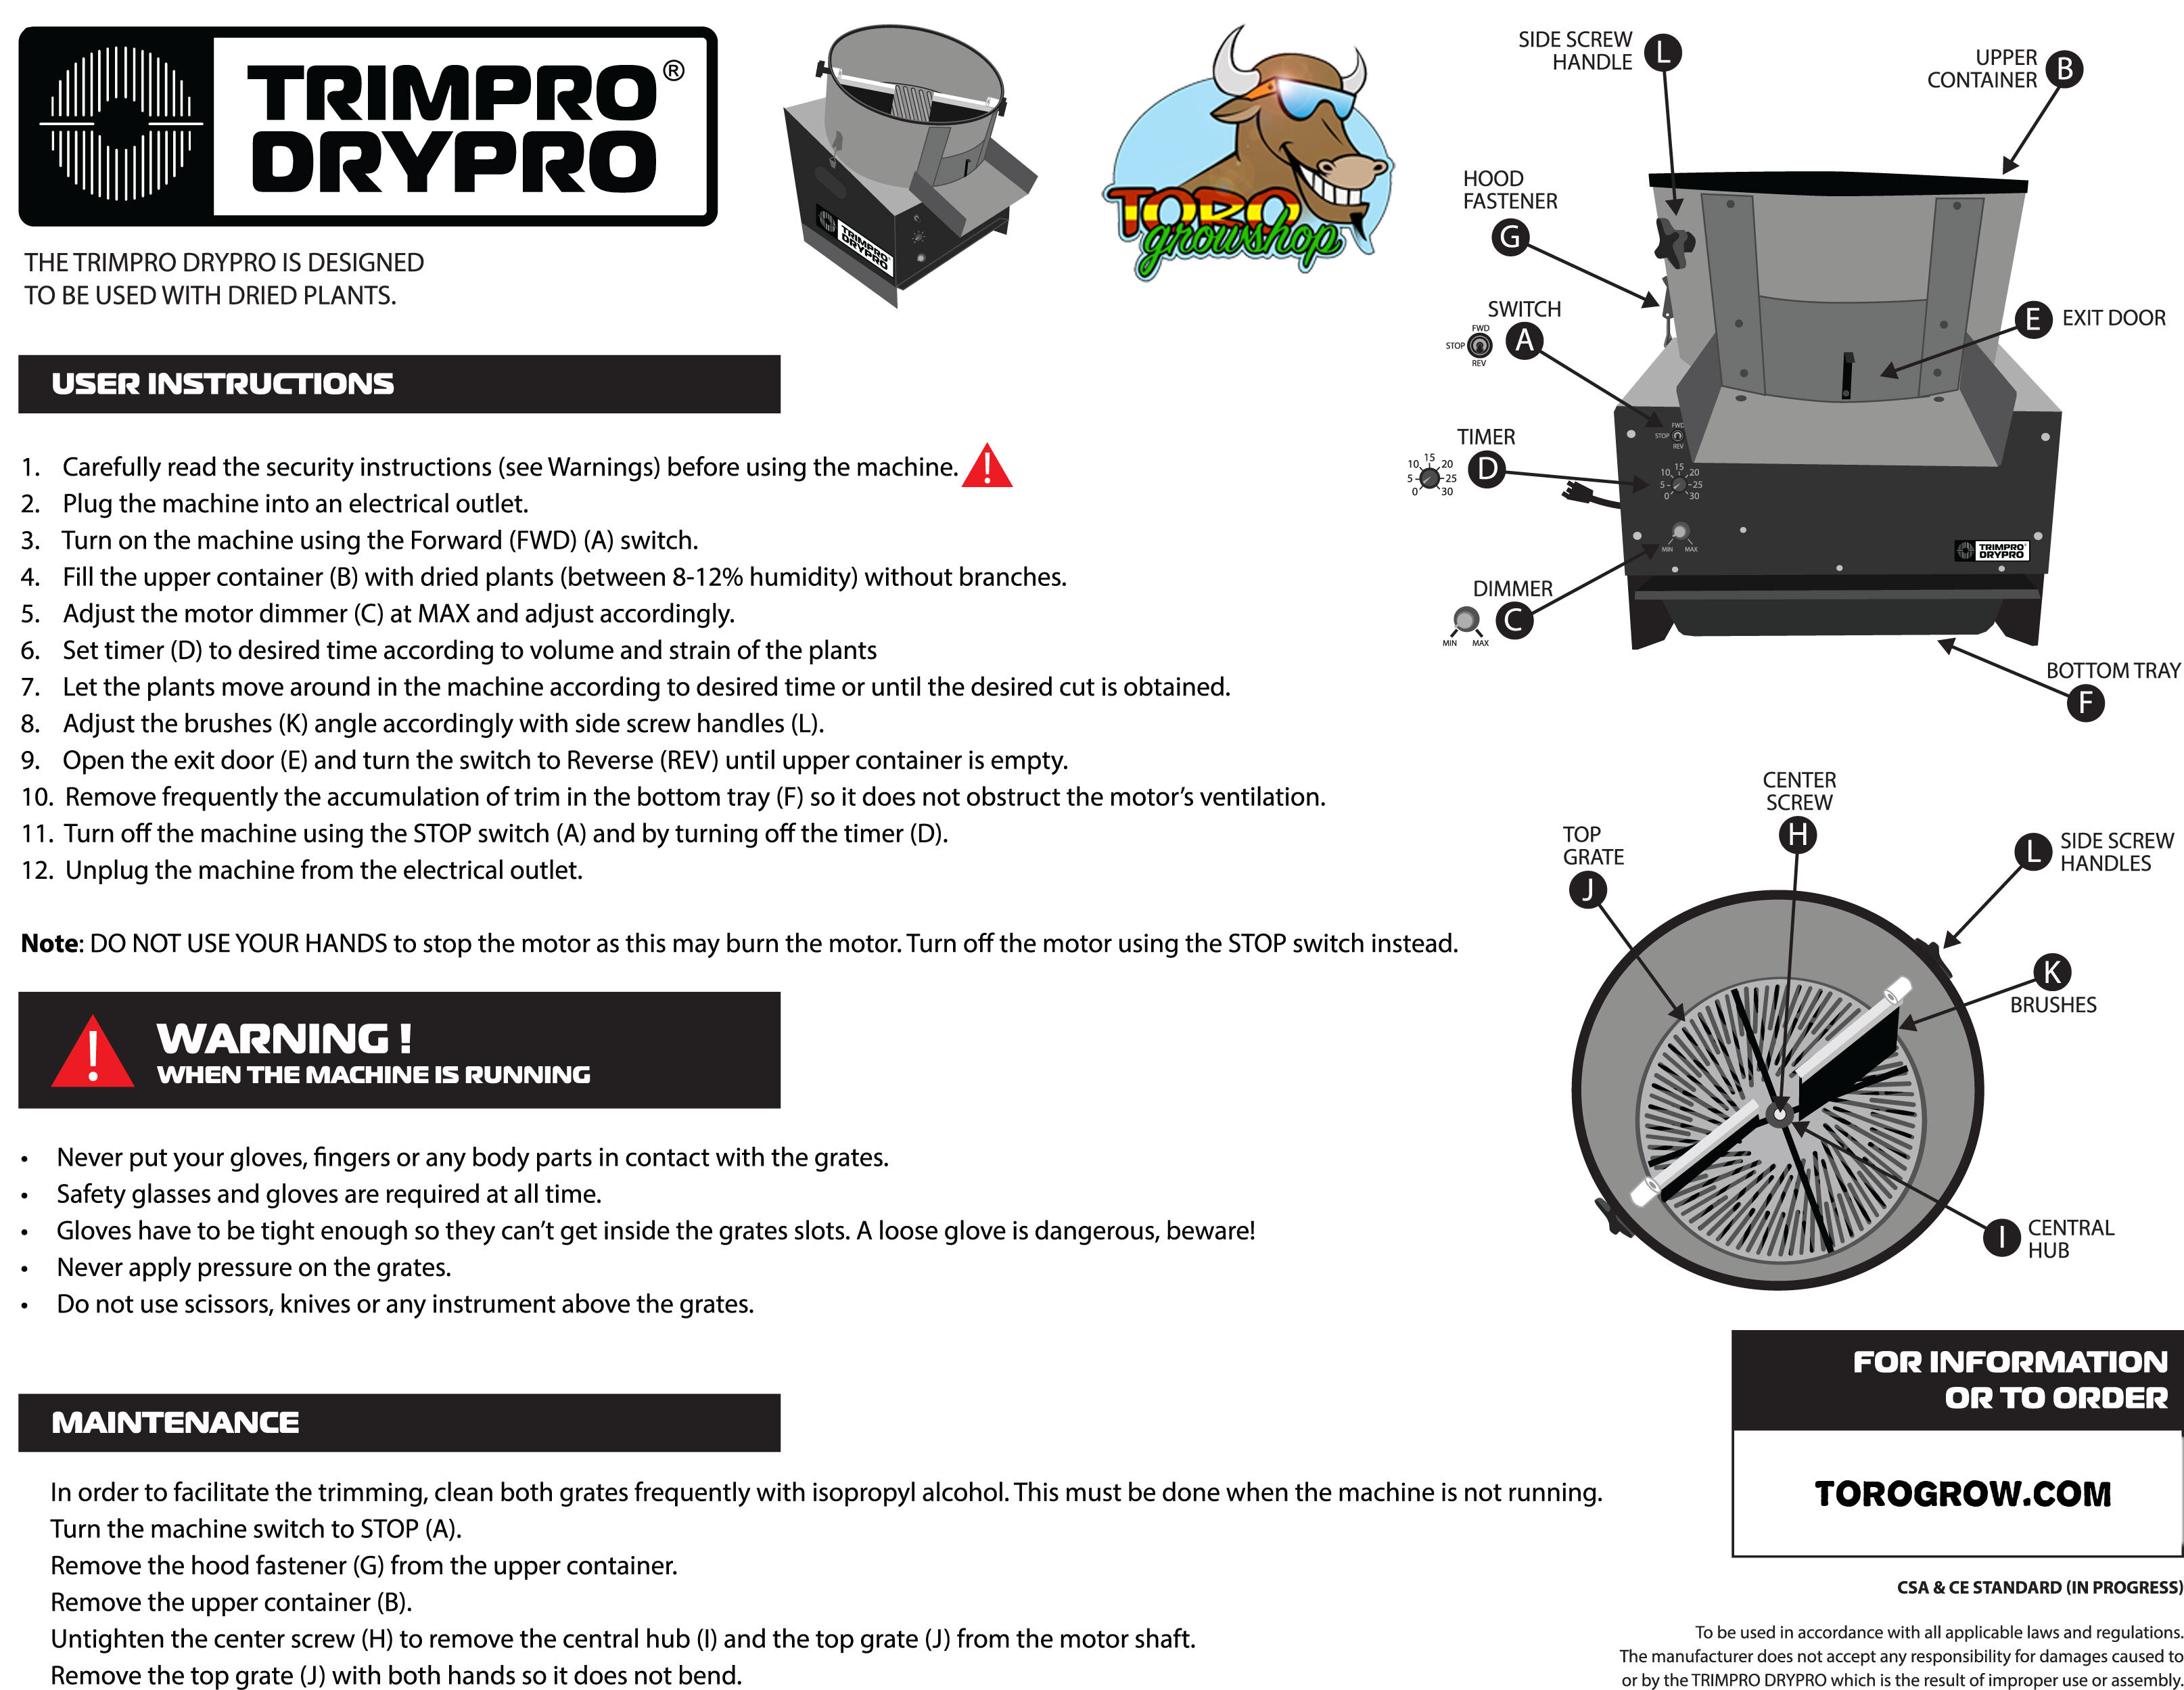 TrimPro DryPro - триммер для обрезки сухих шишек каннабиса